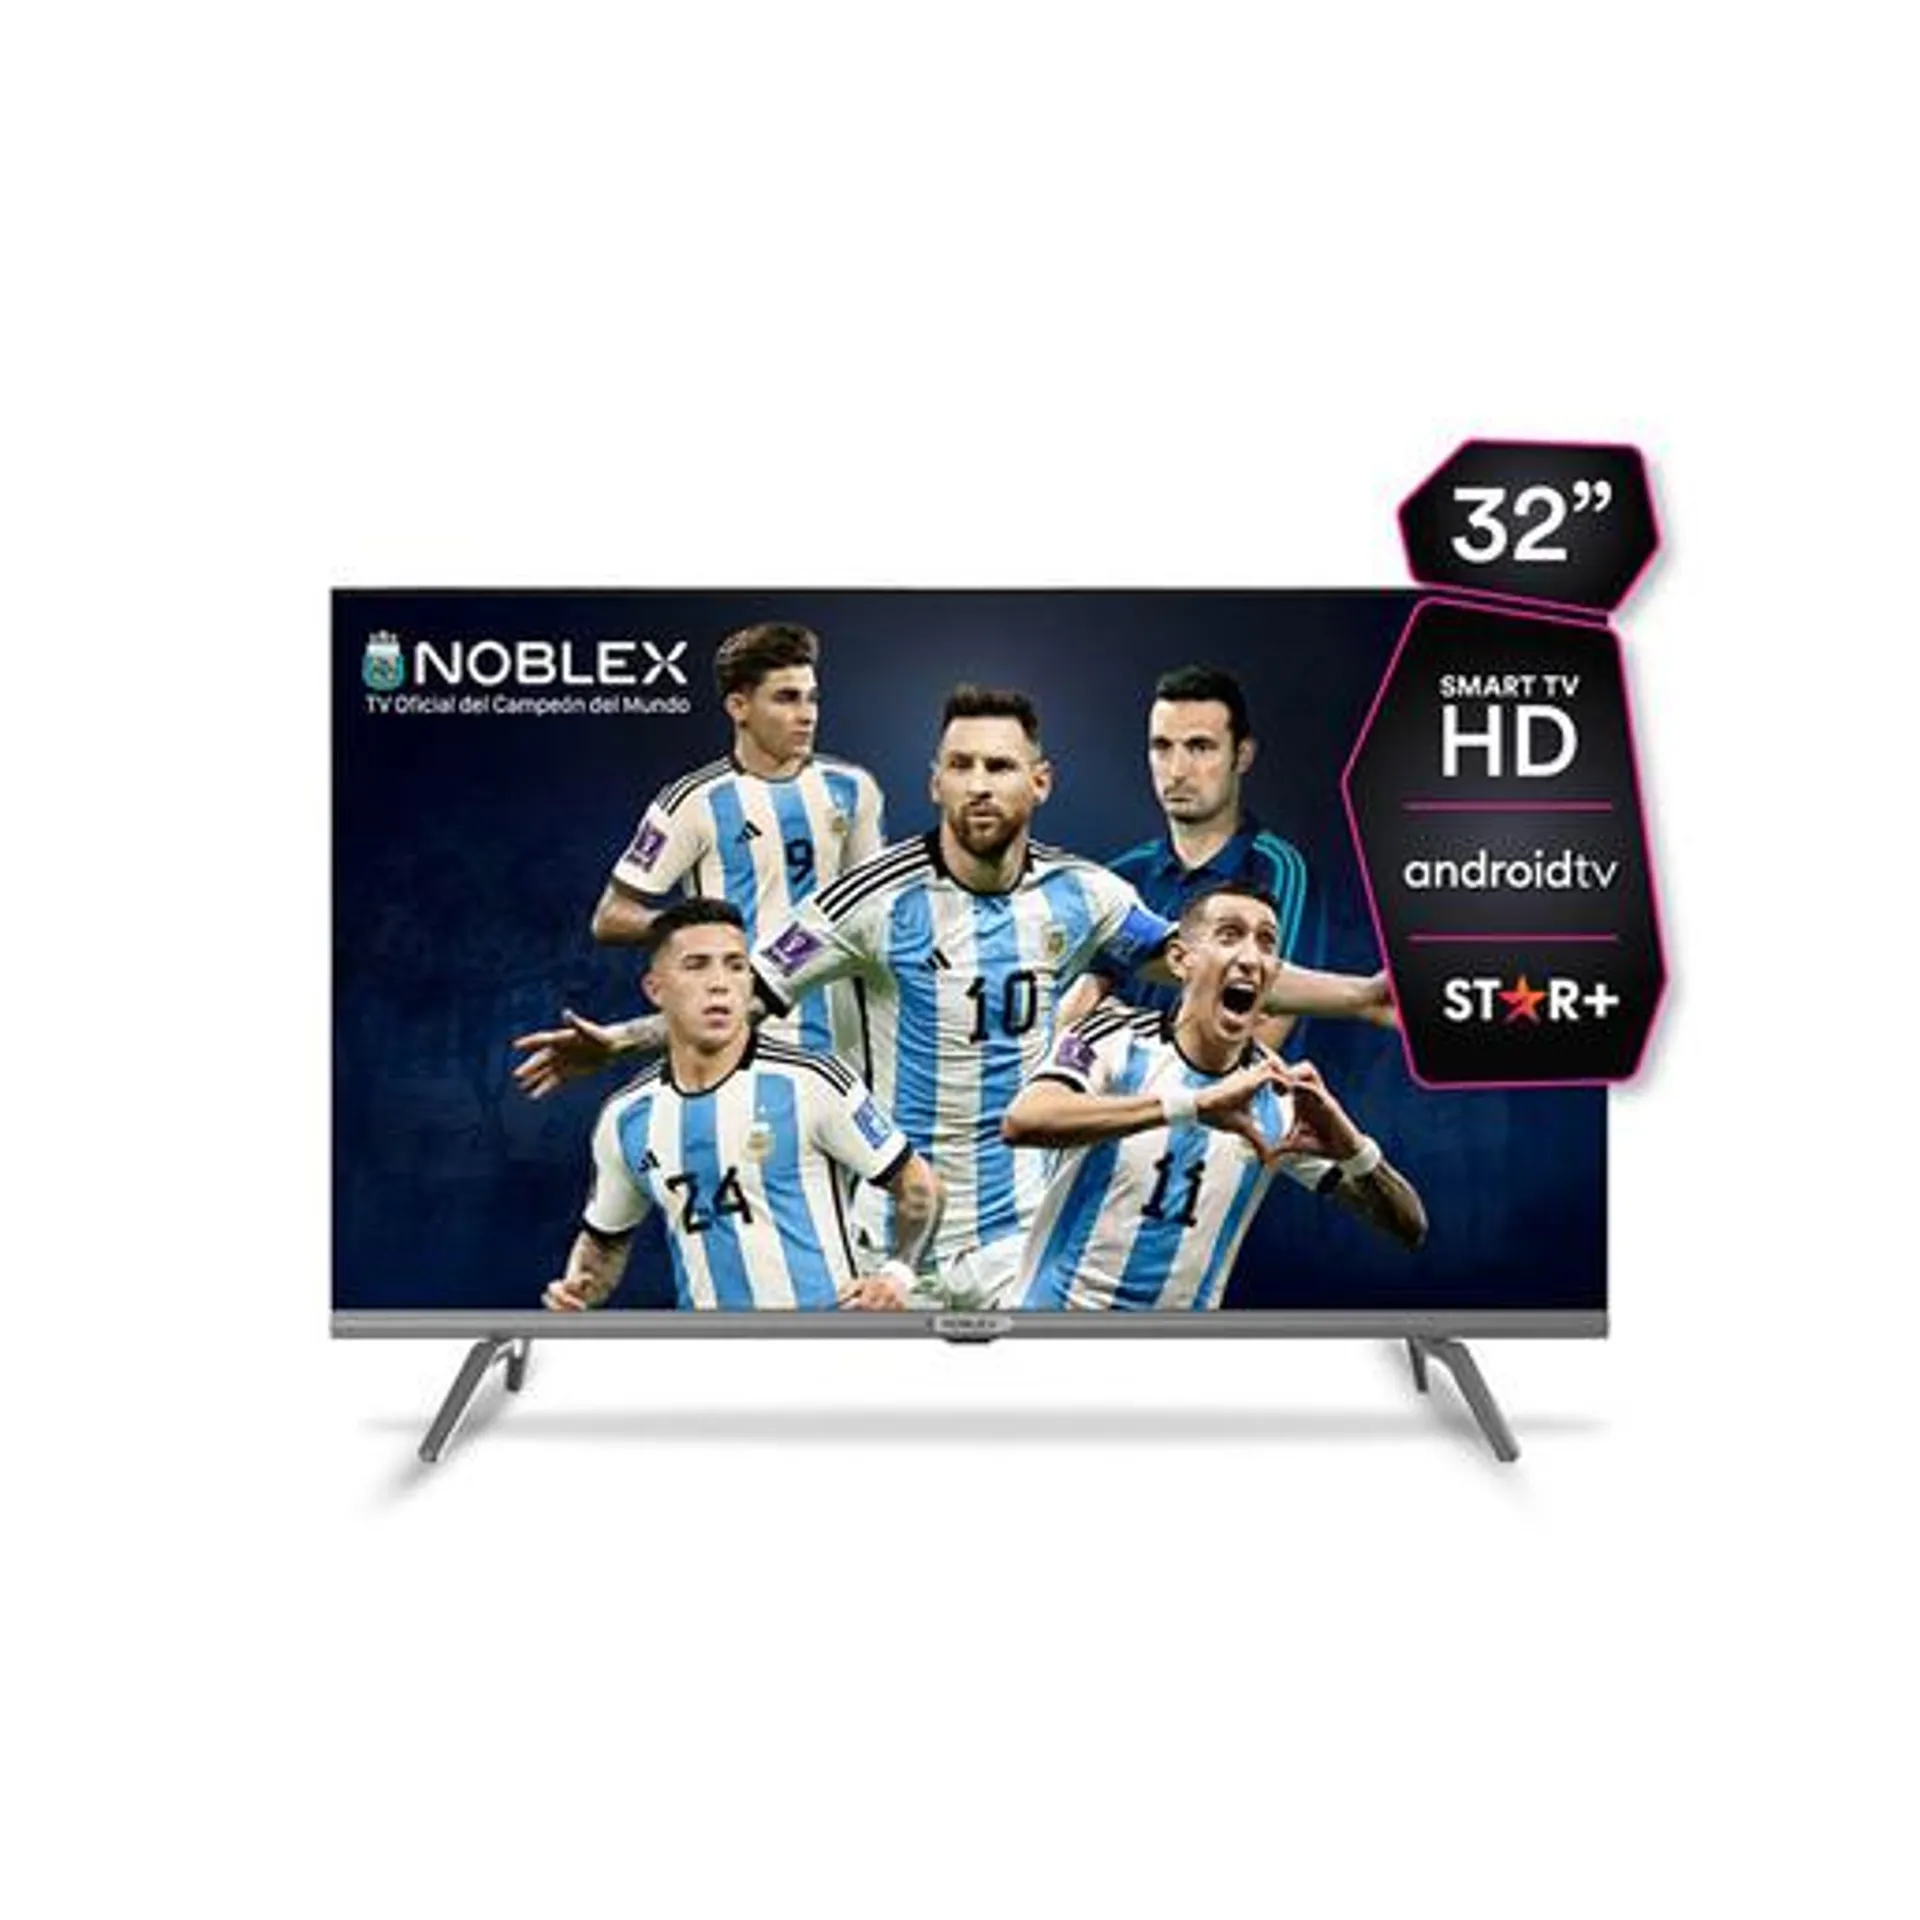 SMART LED ANDROID TV NOBLEX 32 PULGADAS HD DR32X7000